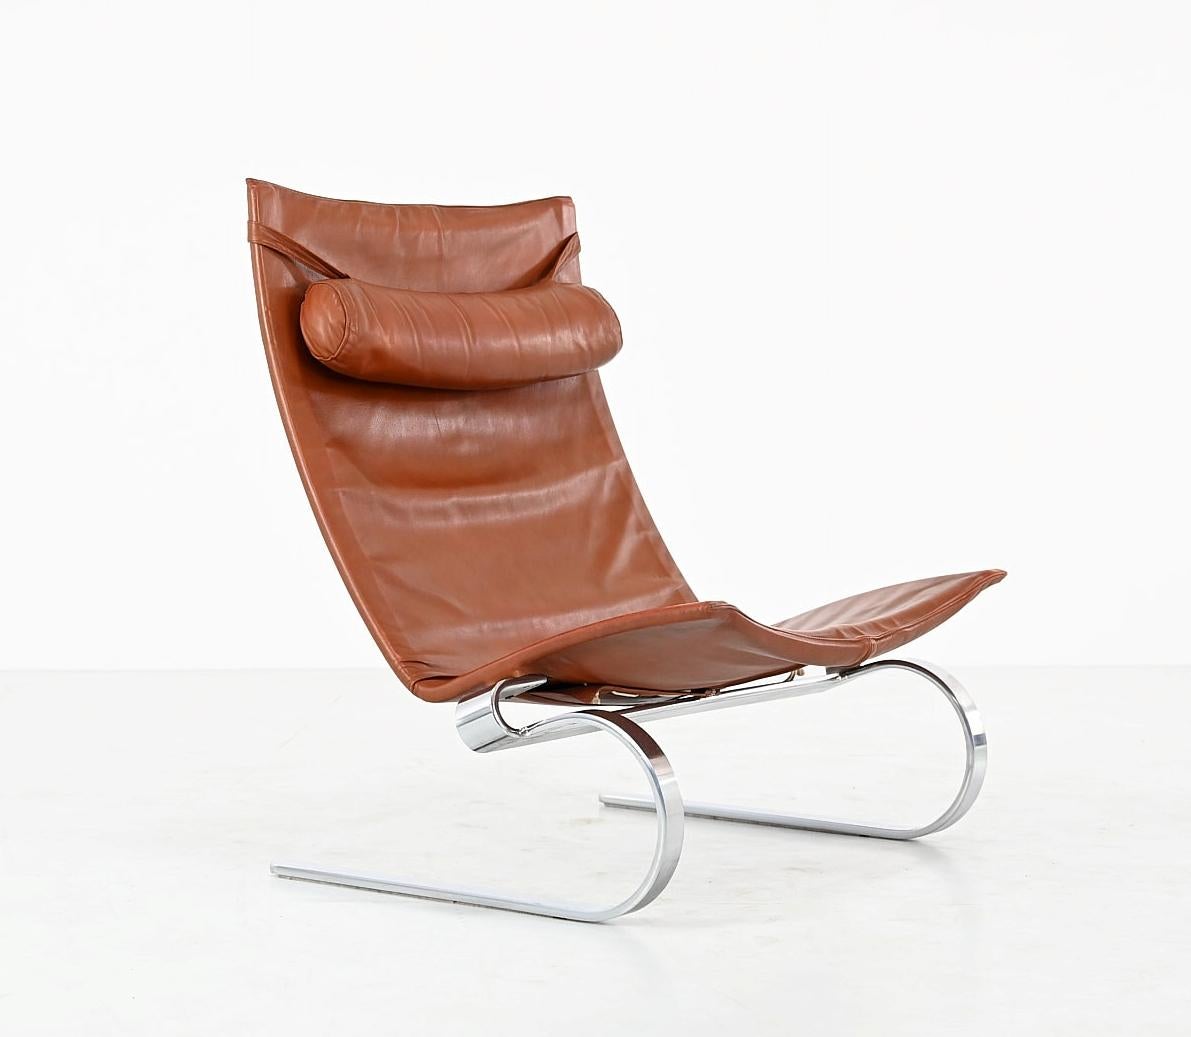 20th Century Mid-Century Modern Lounge Chair PK20 by Poul Kjaerholm, Kold Christiansen